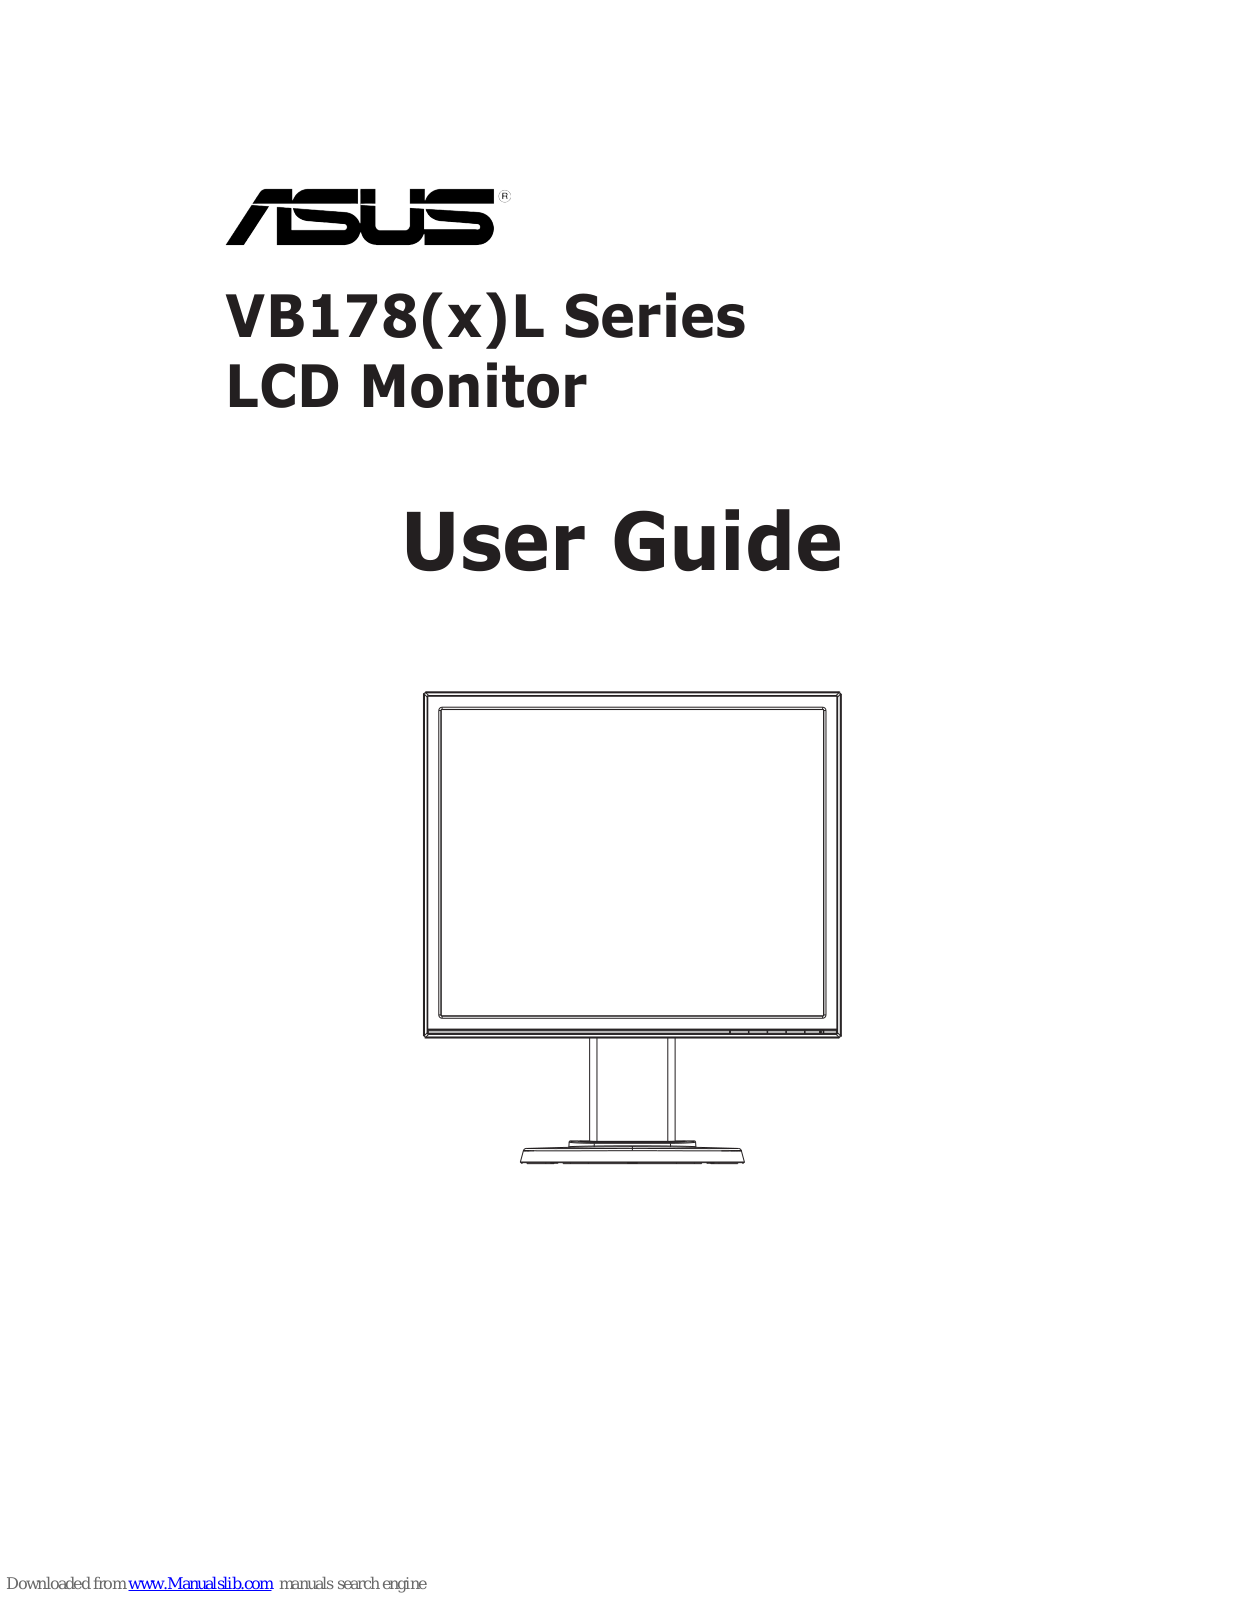 Asus VB178NL, VB178SL, VB178DL User Manual